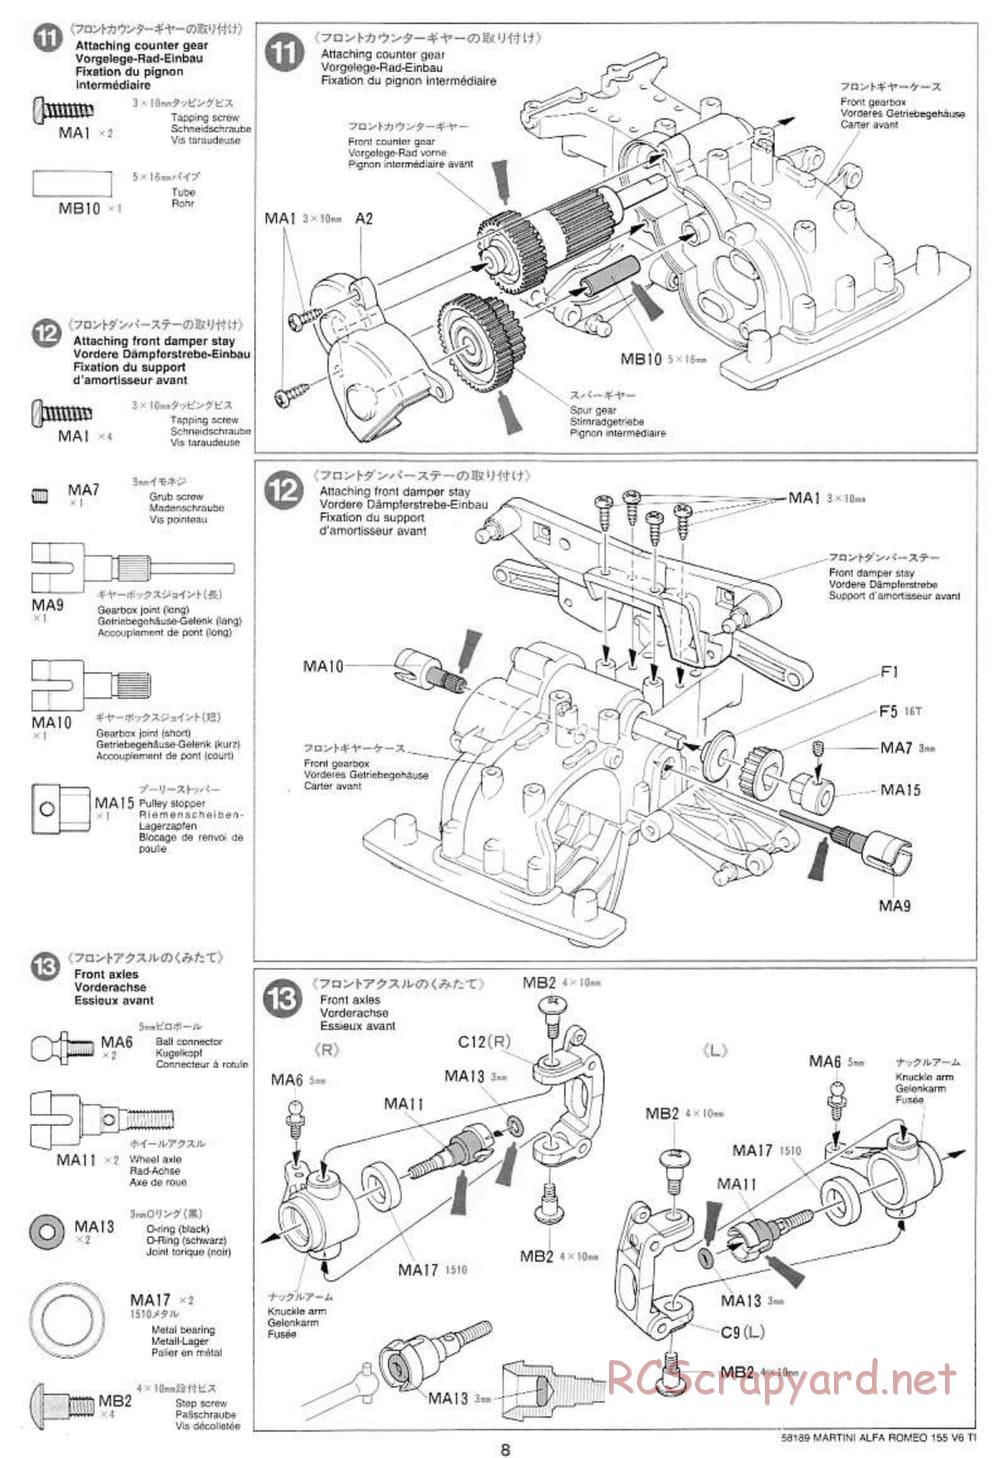 Tamiya - Martini Alfa Romeo 155 V6 TI - TA-03F Chassis - Manual - Page 8